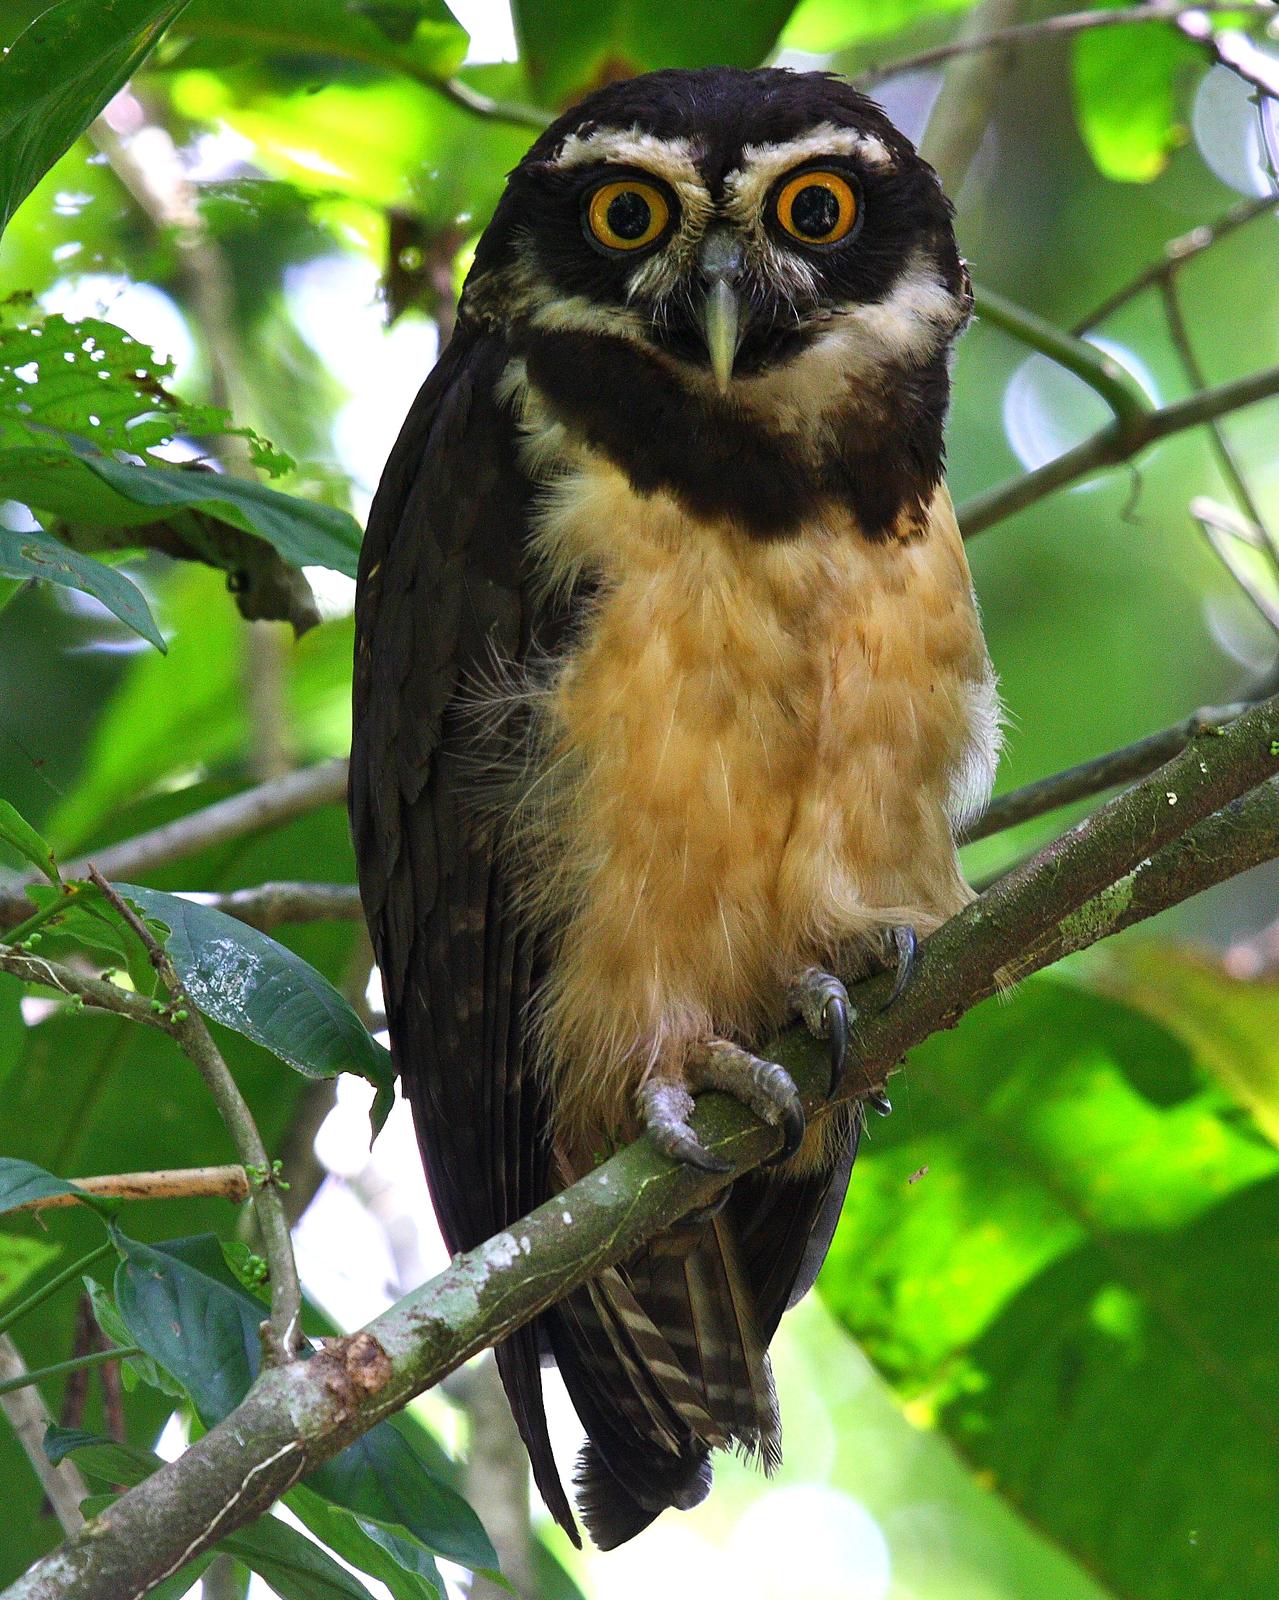 Spectacled Owl Photo by Matthew Brady